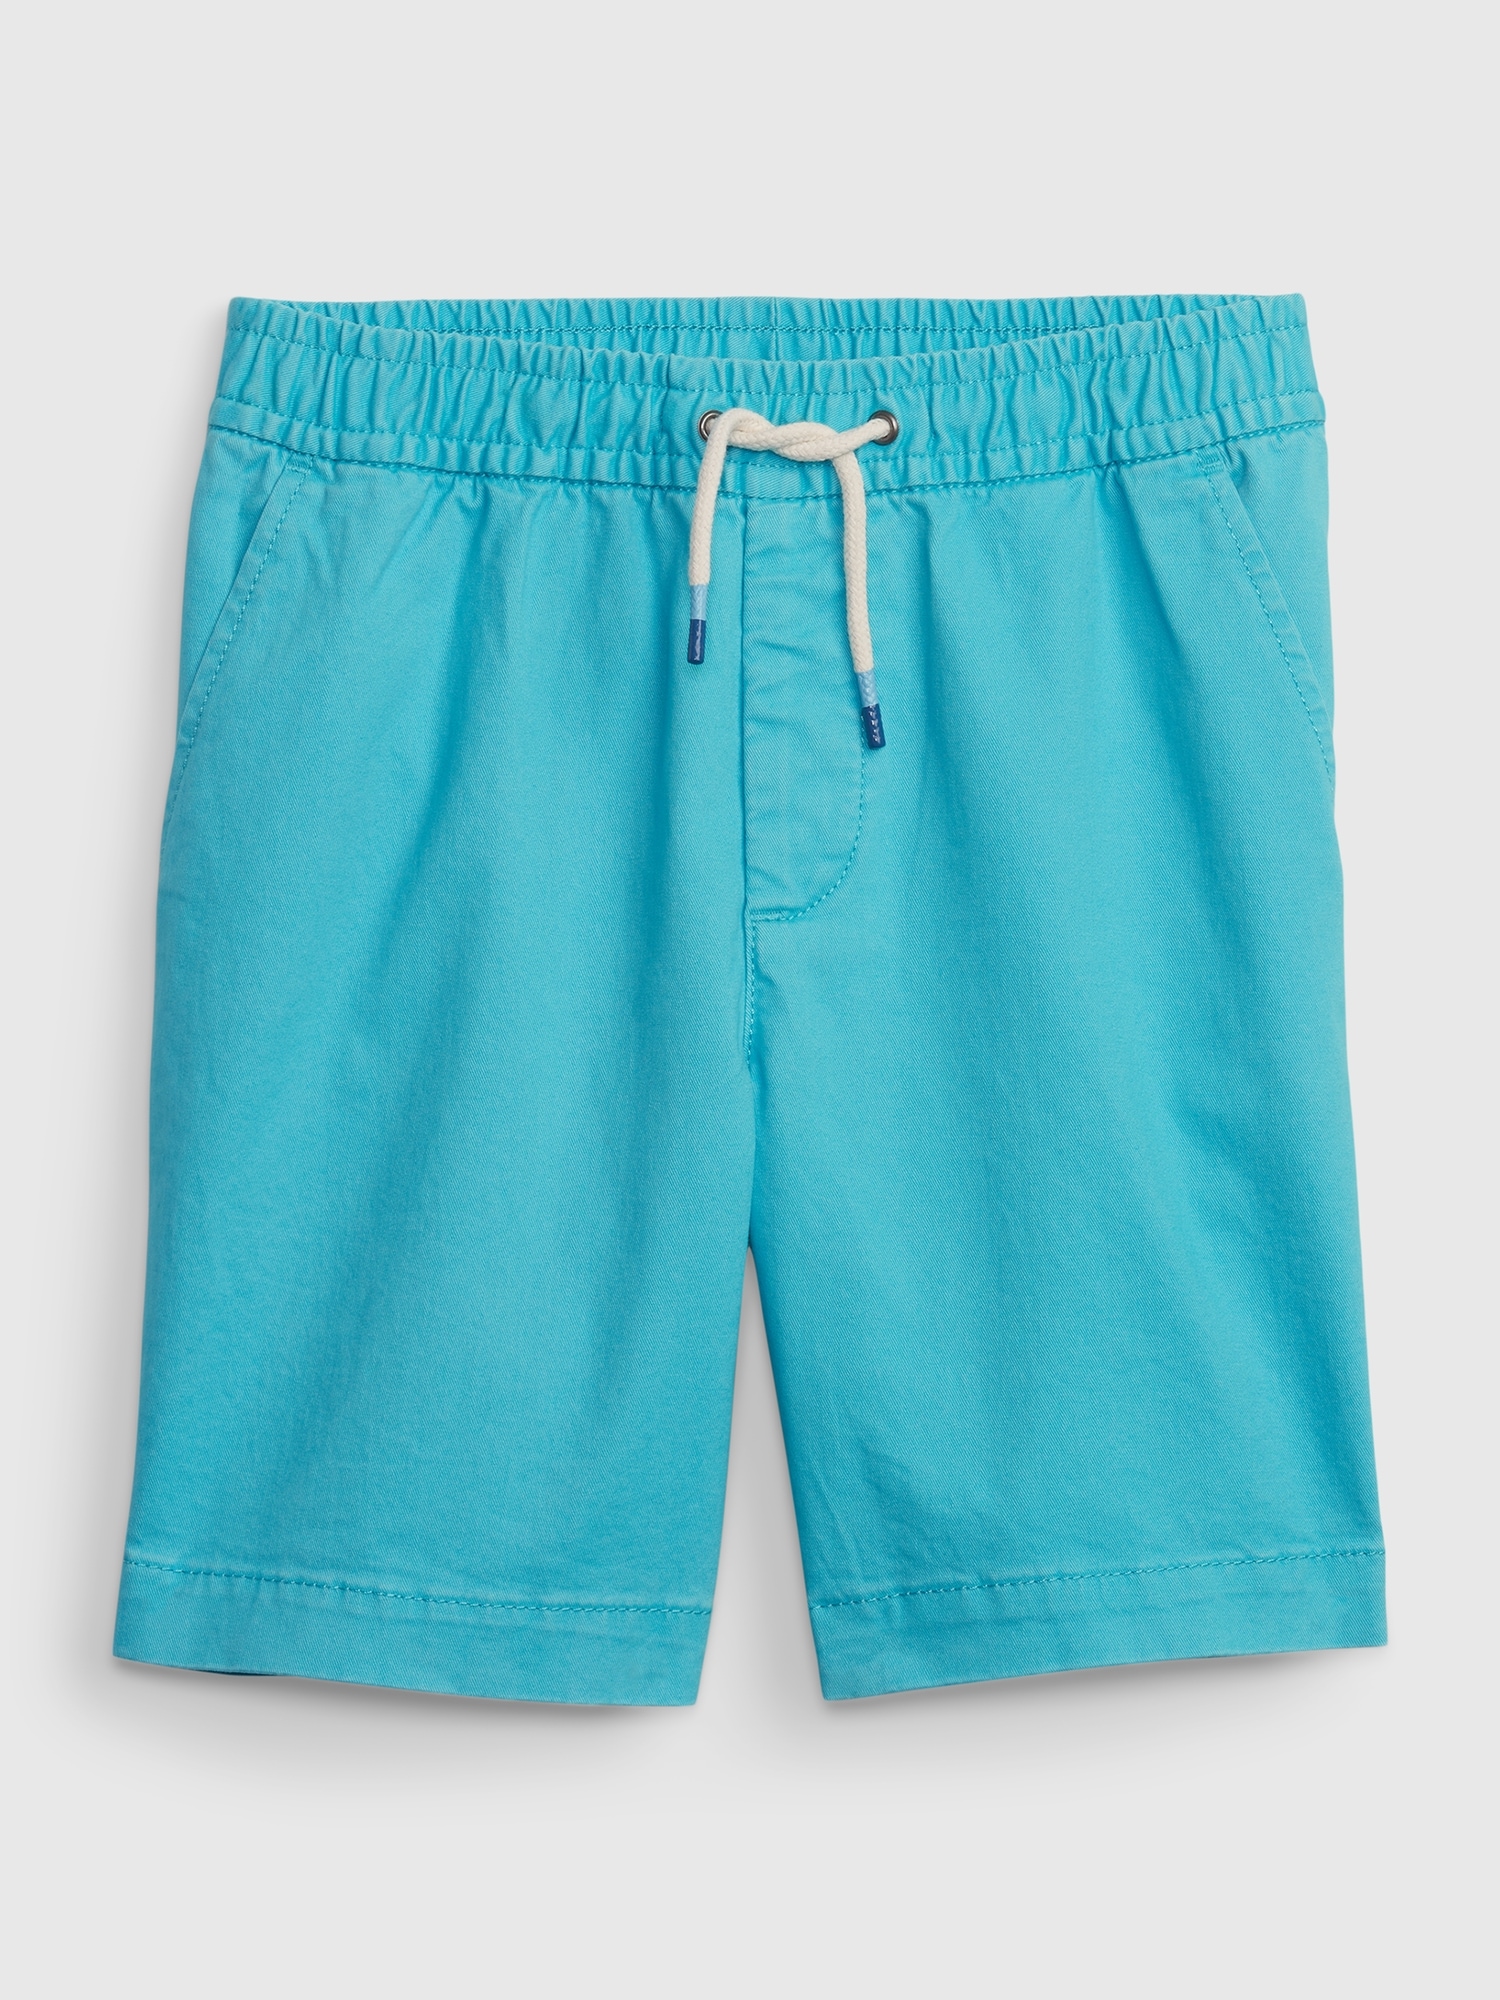 Make your own - Children's Simple Unisex Summer Shorts FREE PDF